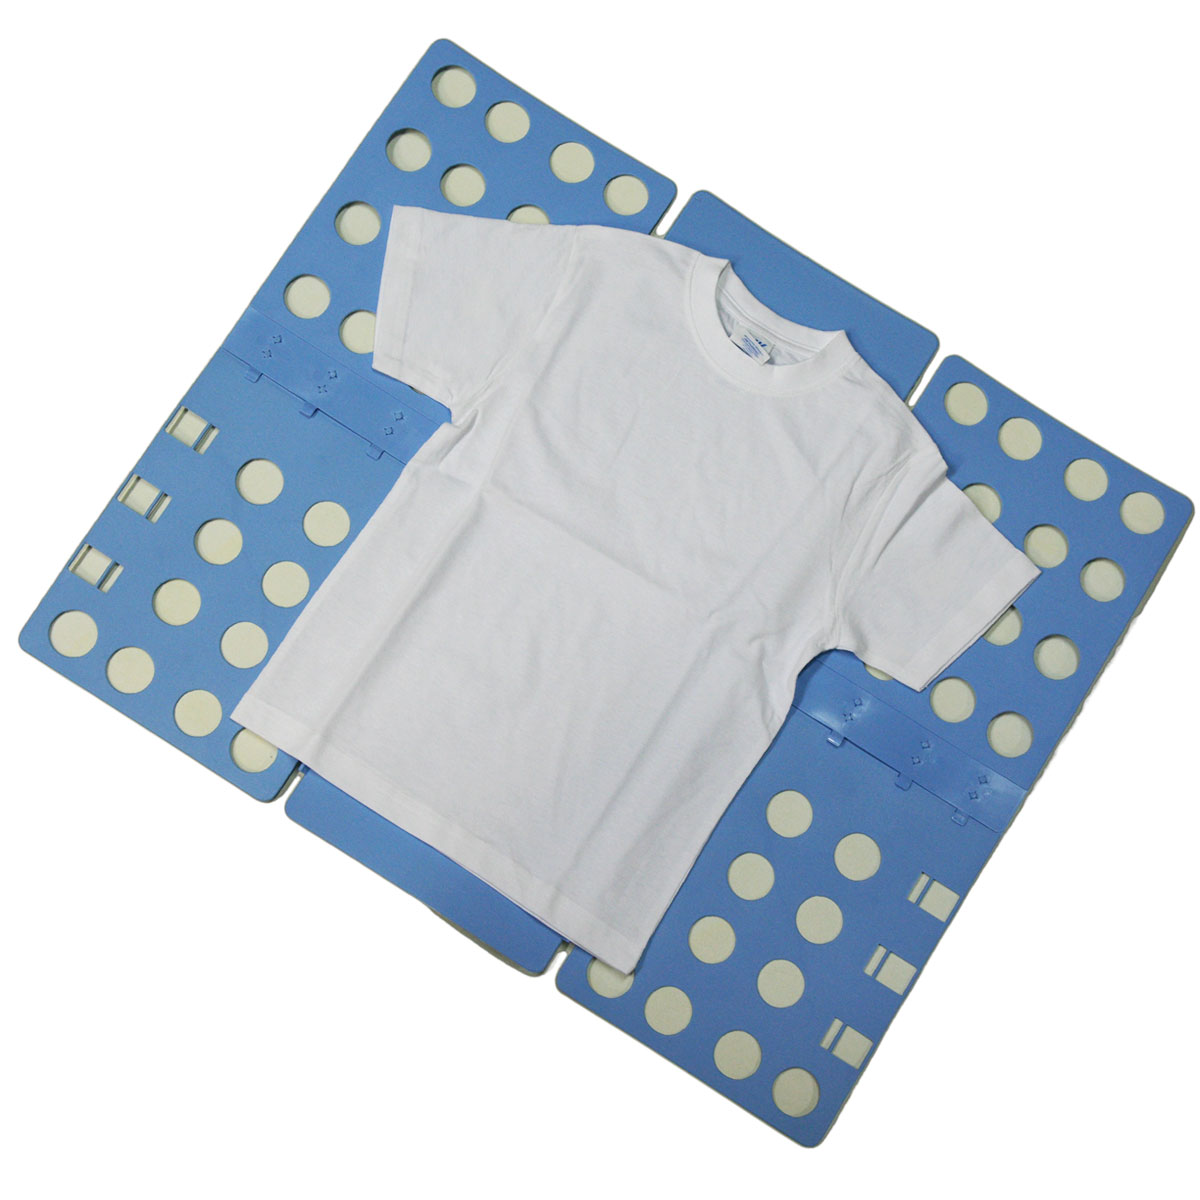 Folding Kit for T-Shirt